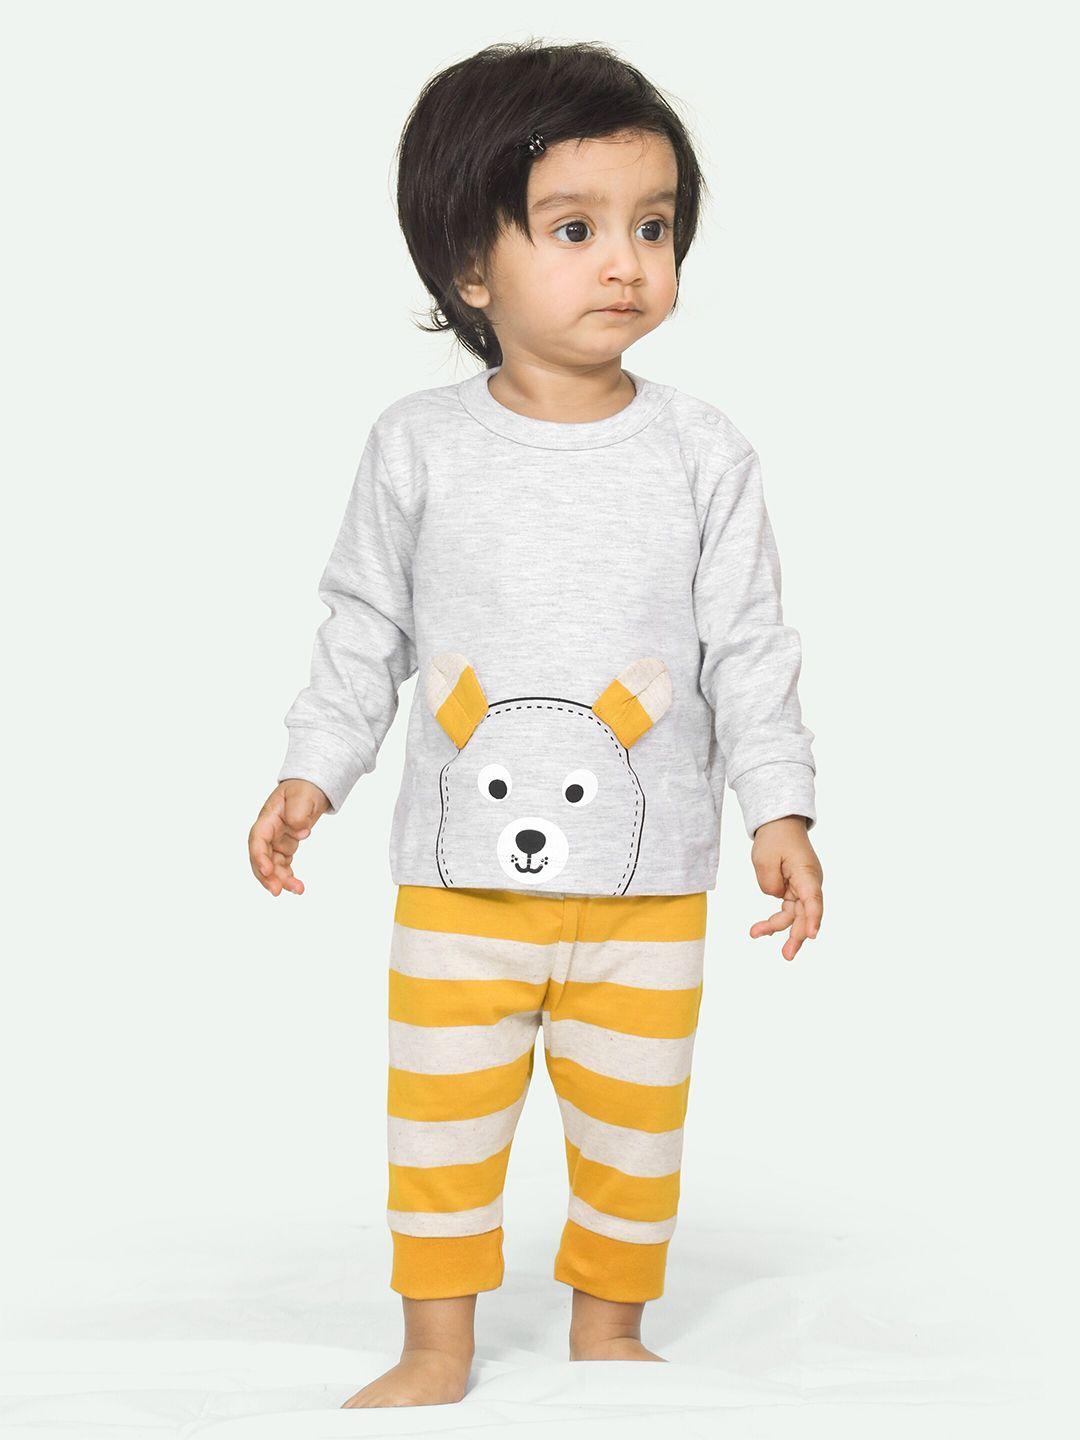 ariel infants printed cotton t-shirt with pyjamas clothing set